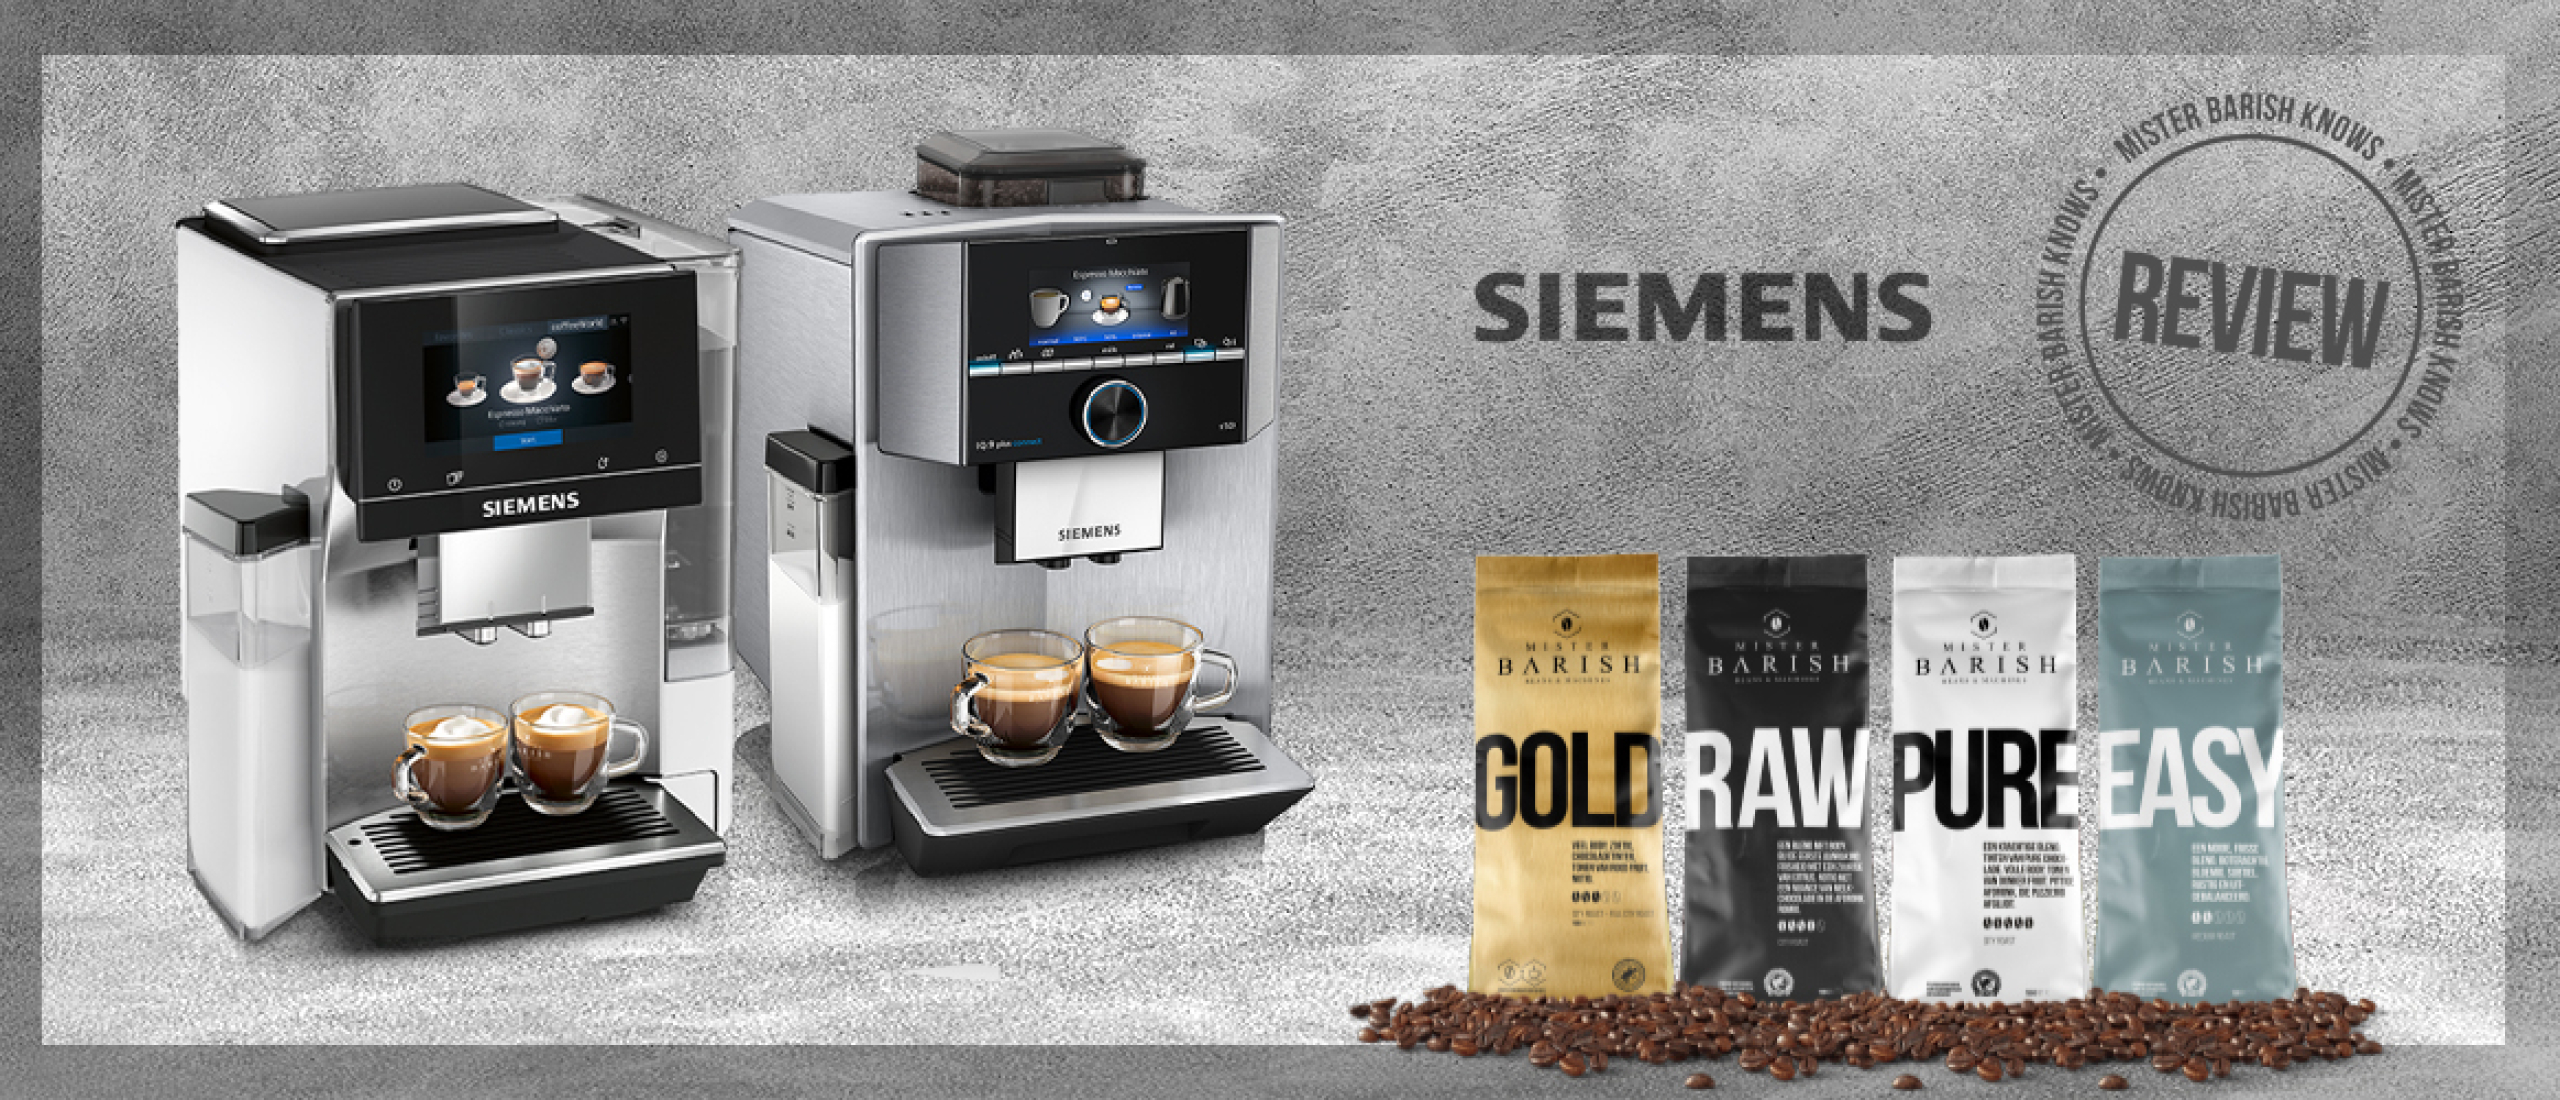 Siemens koffiemachine kopen? Vijf reviews met tips en koopadvies